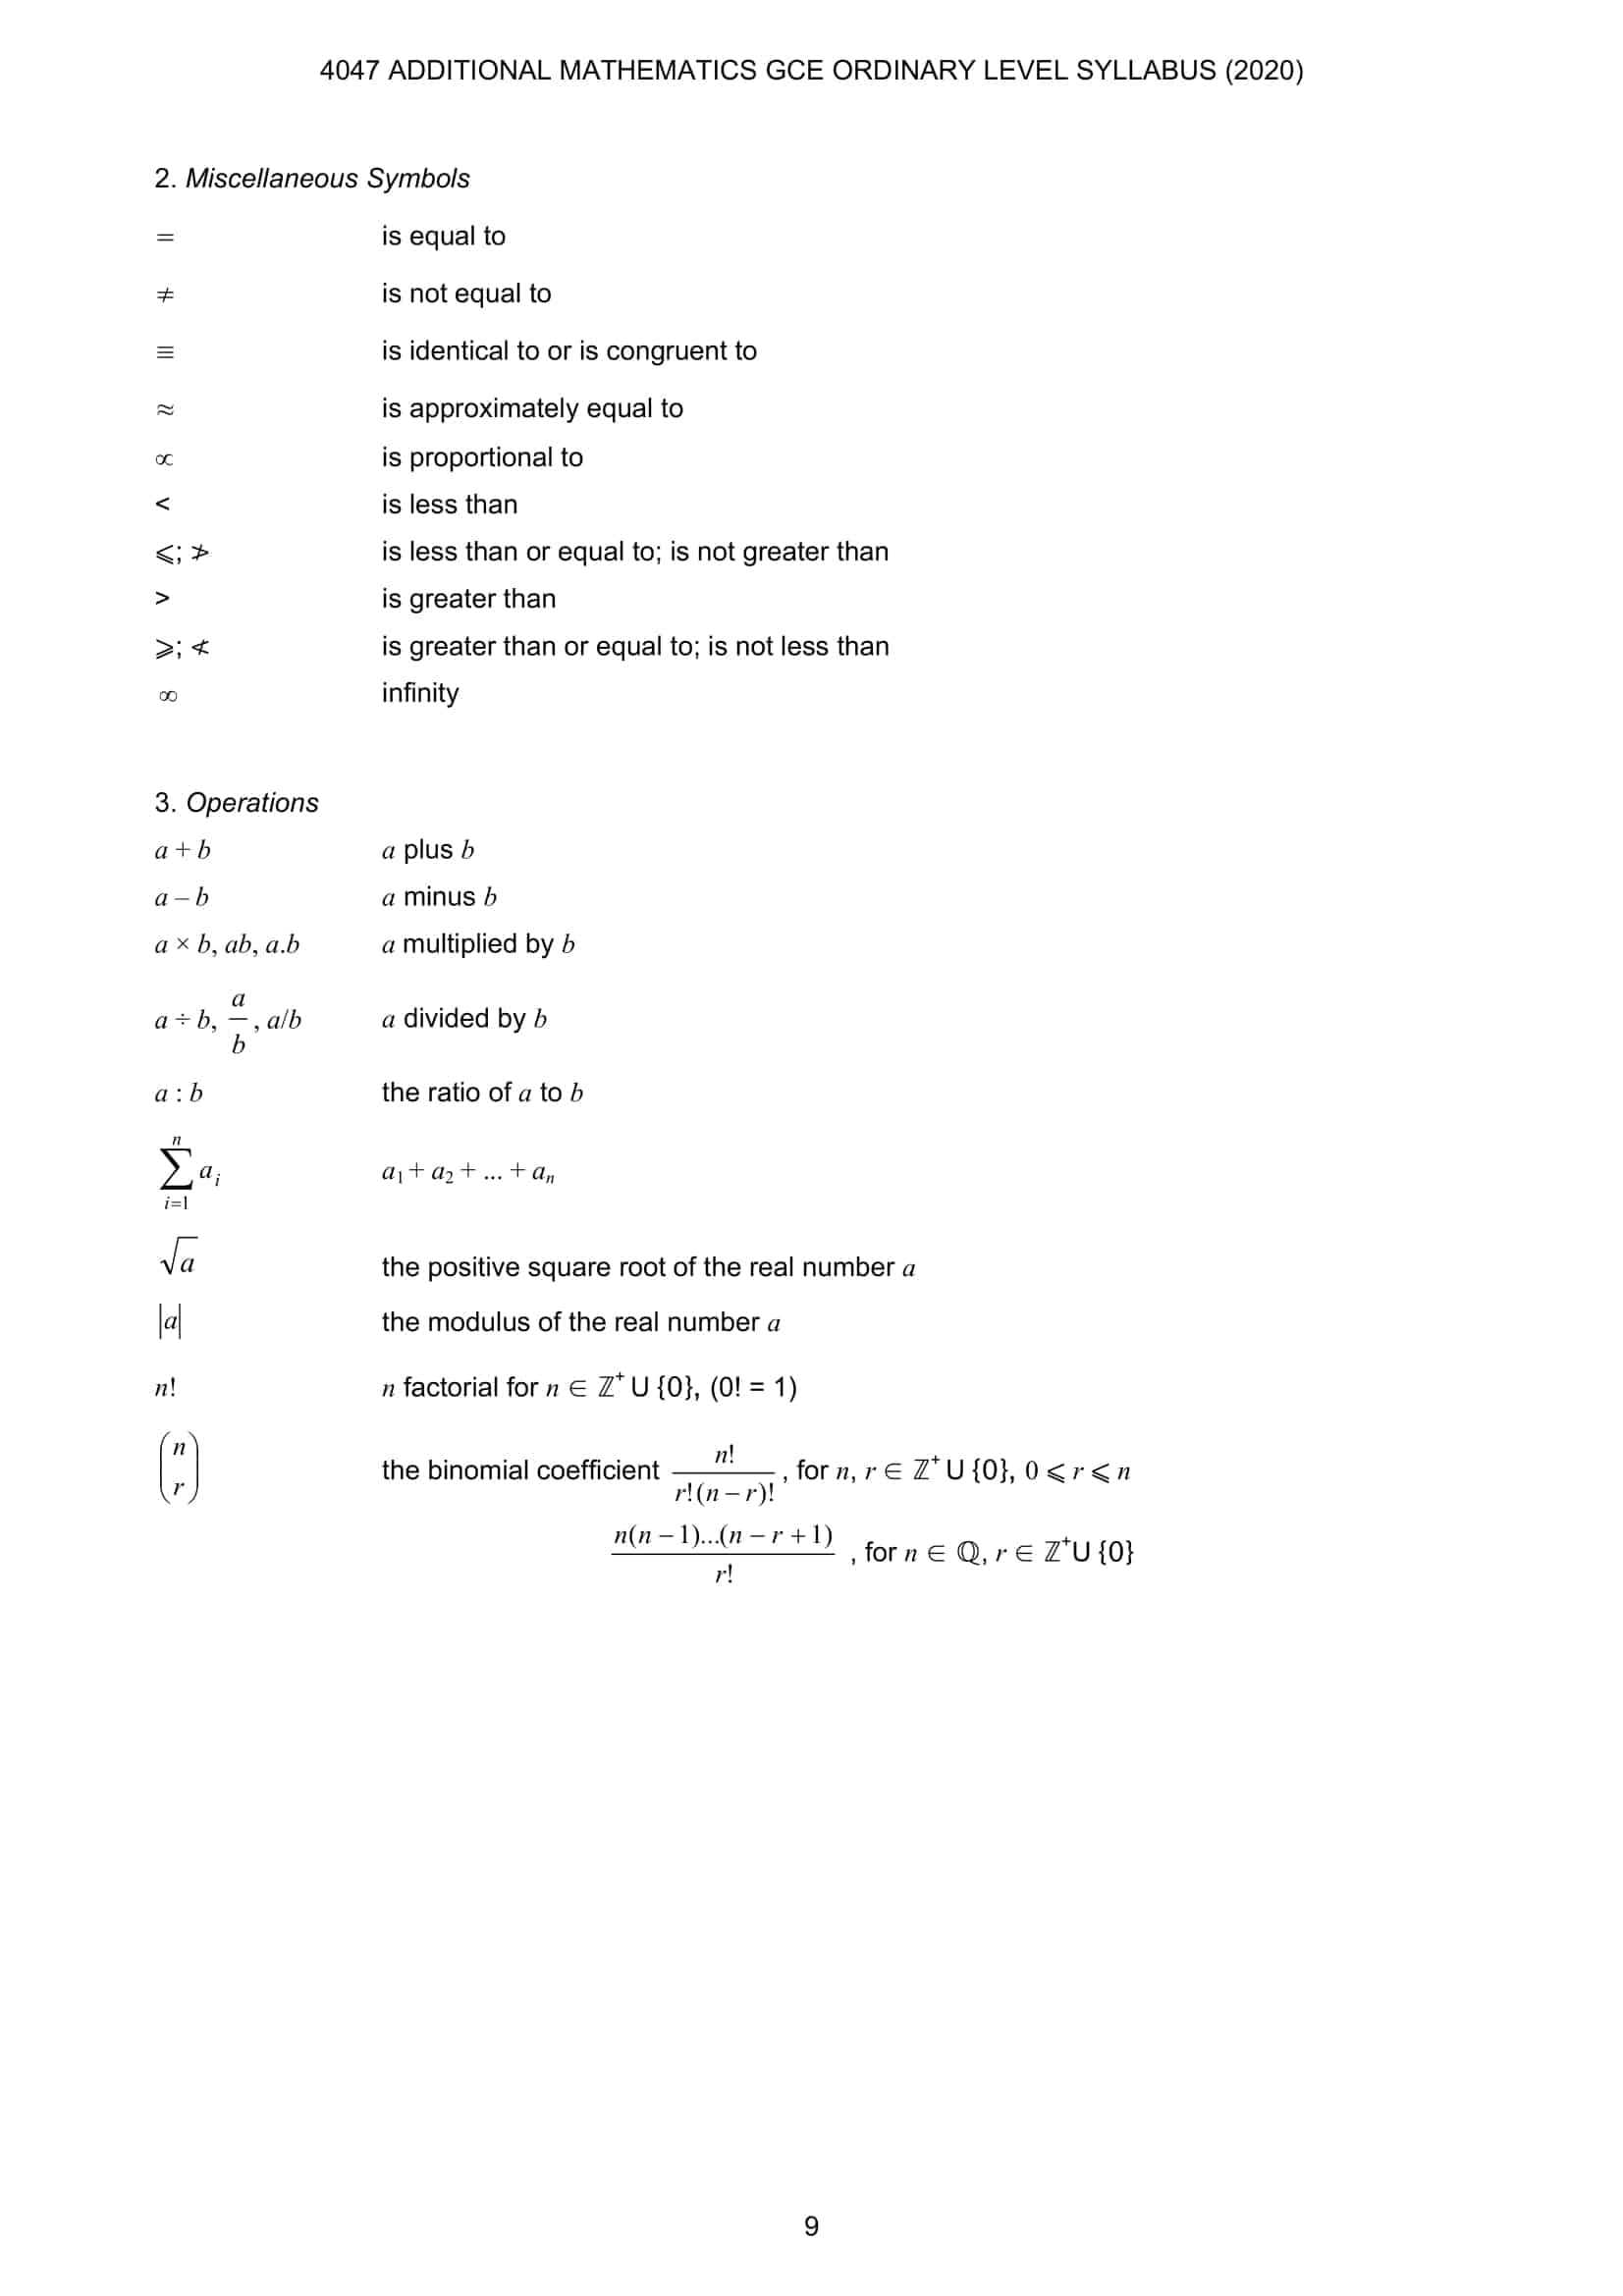 mathematics formula list